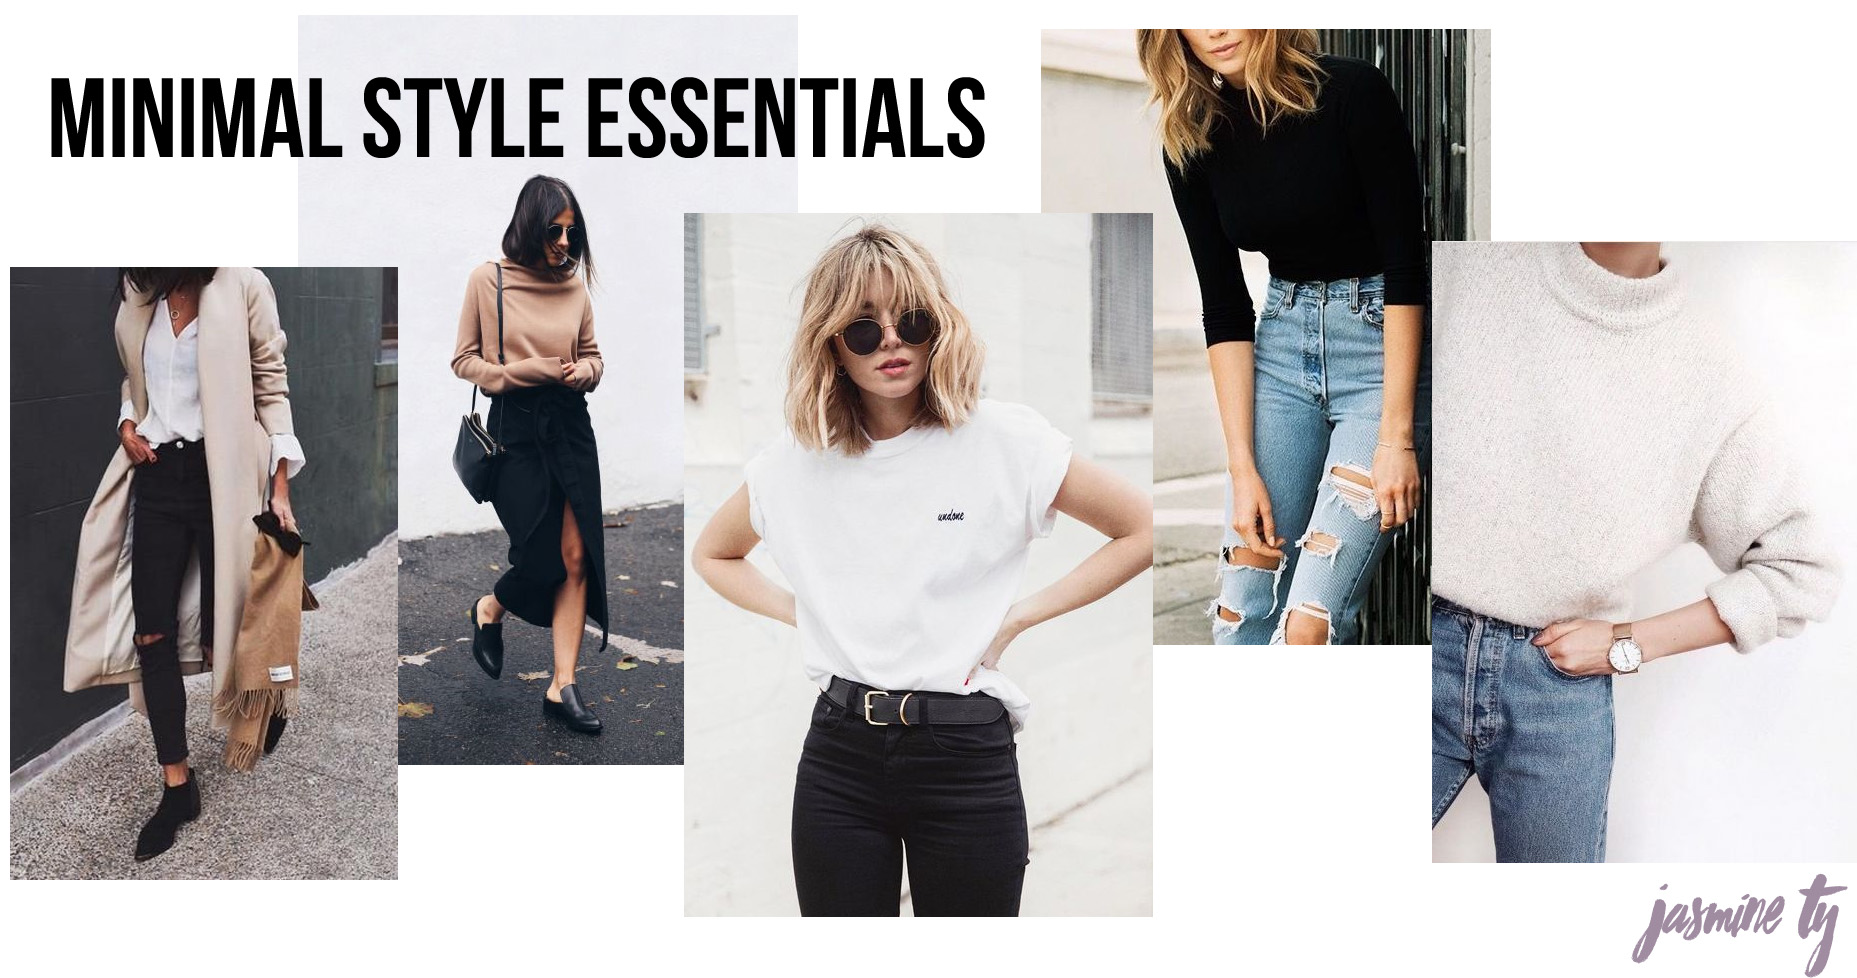 10 Minimalist Fashion Style Essentials - Jasmine Ty